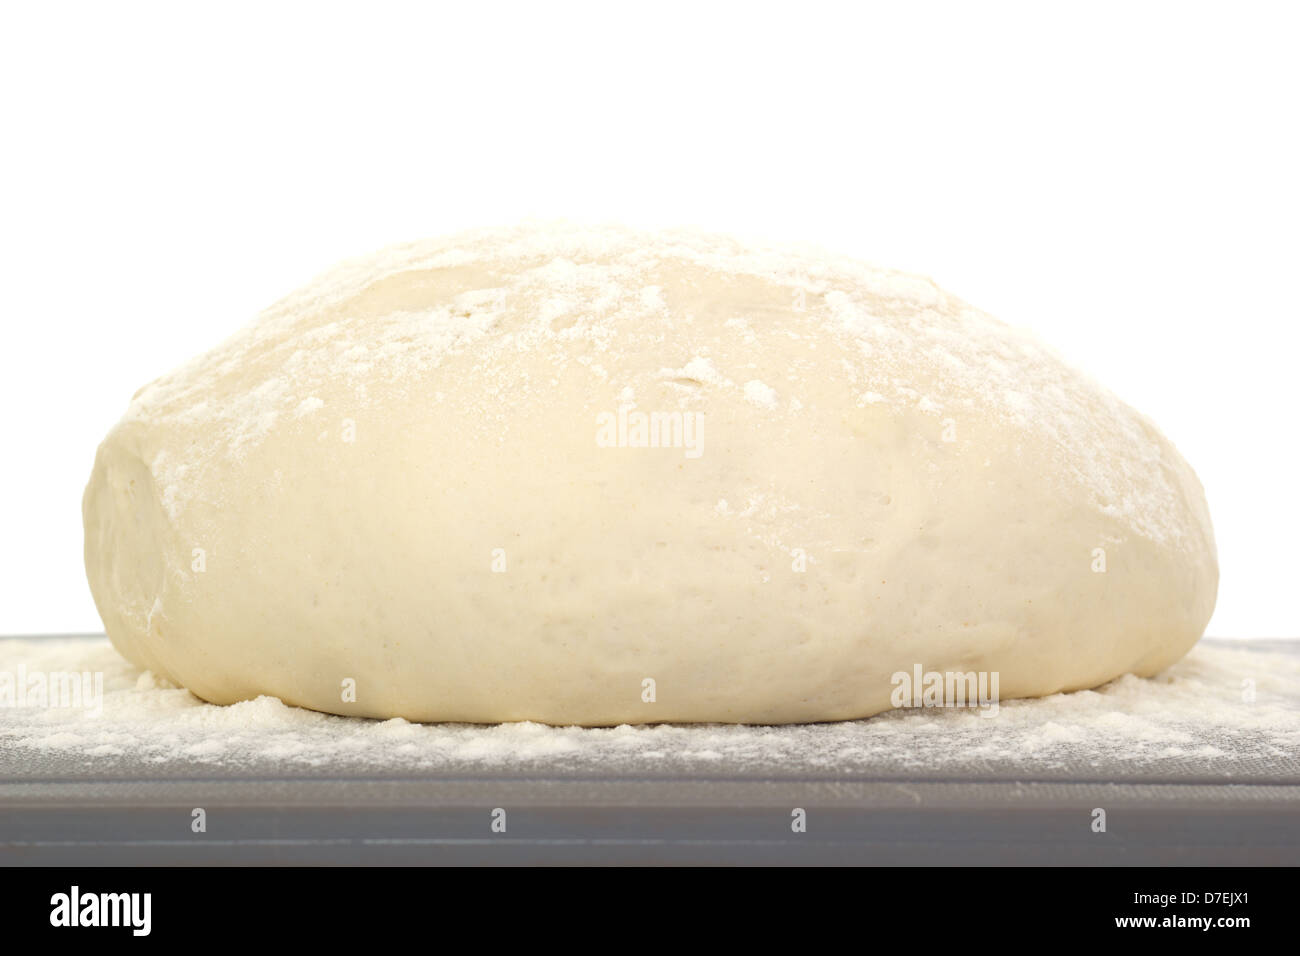 Rising bread dough set: image 1 of 4 Stock Photo